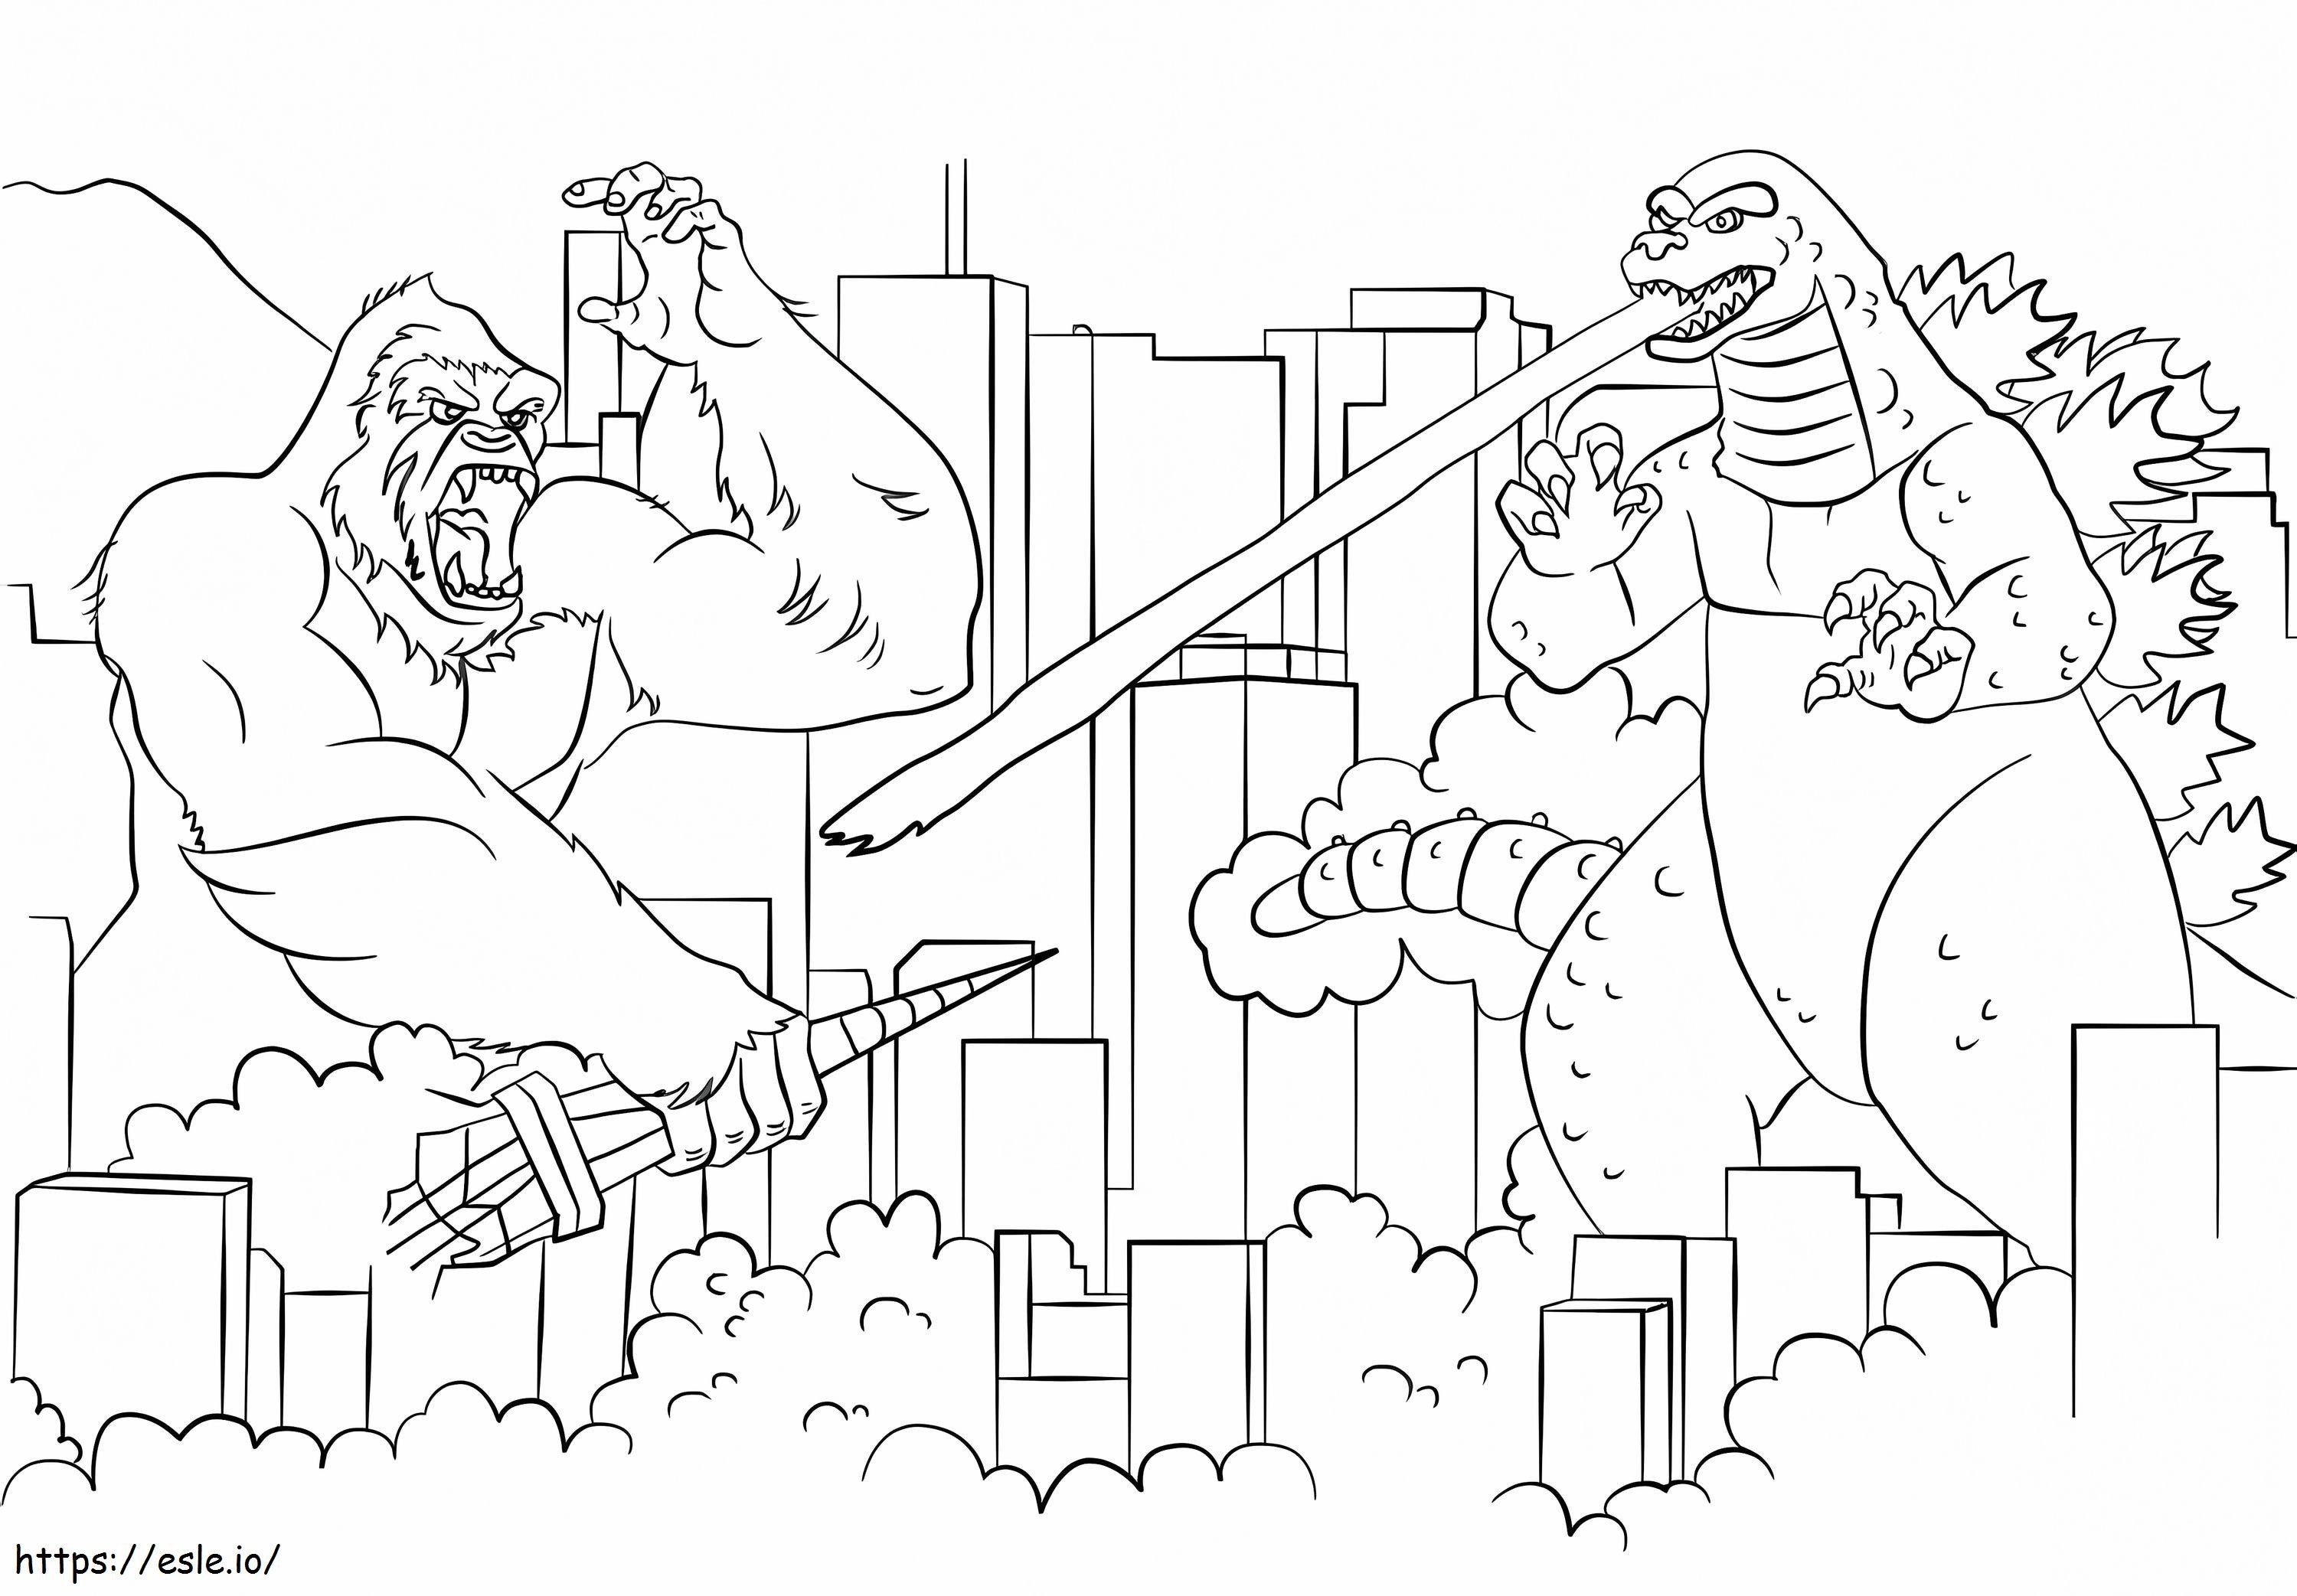 Godzilla Vs. King Kong In The City coloring page